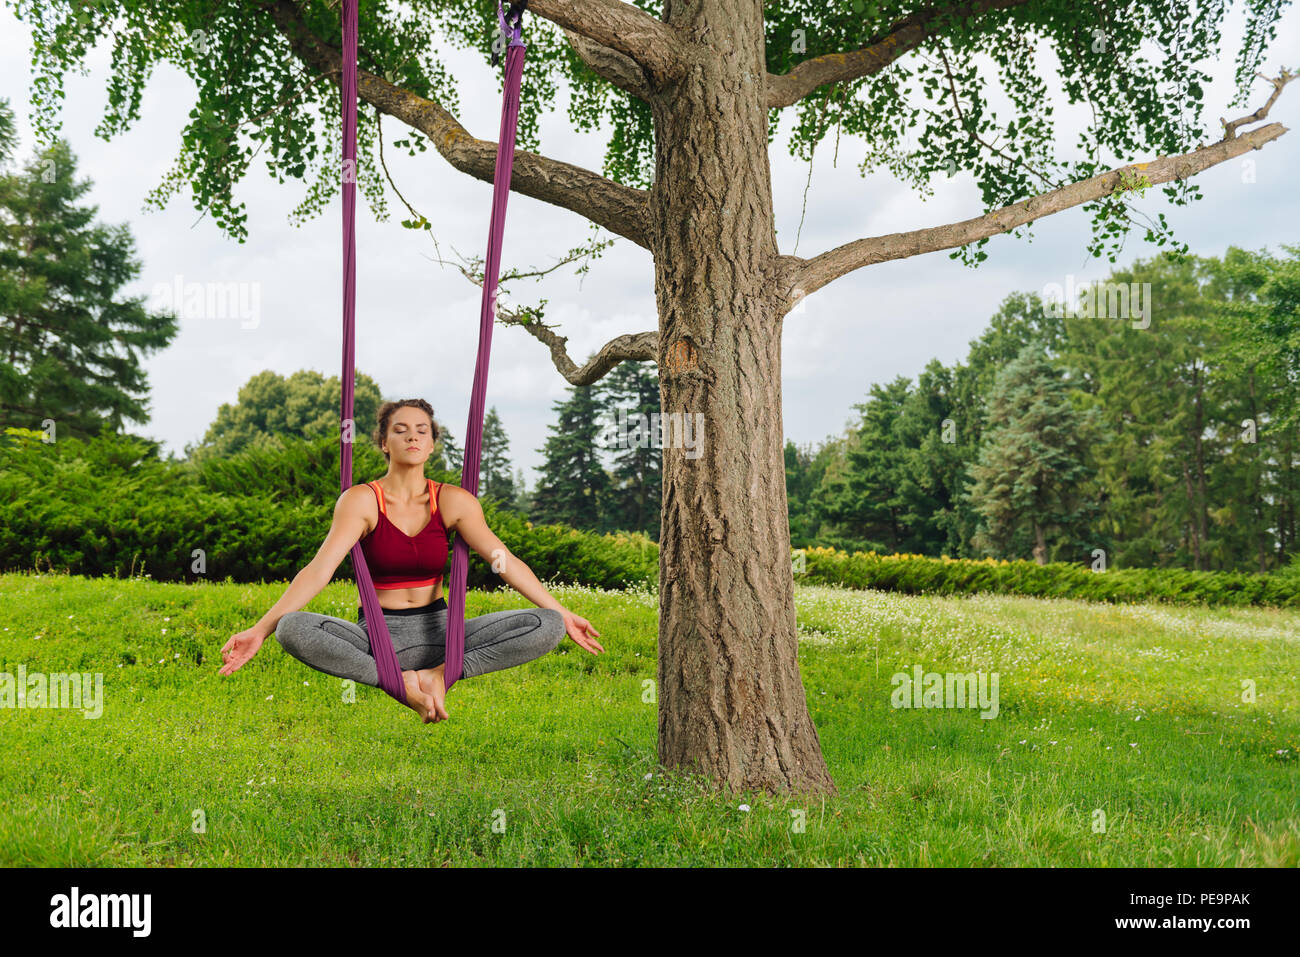 Professional yoga woman performing sitting aerial yoga pose Stock Photo